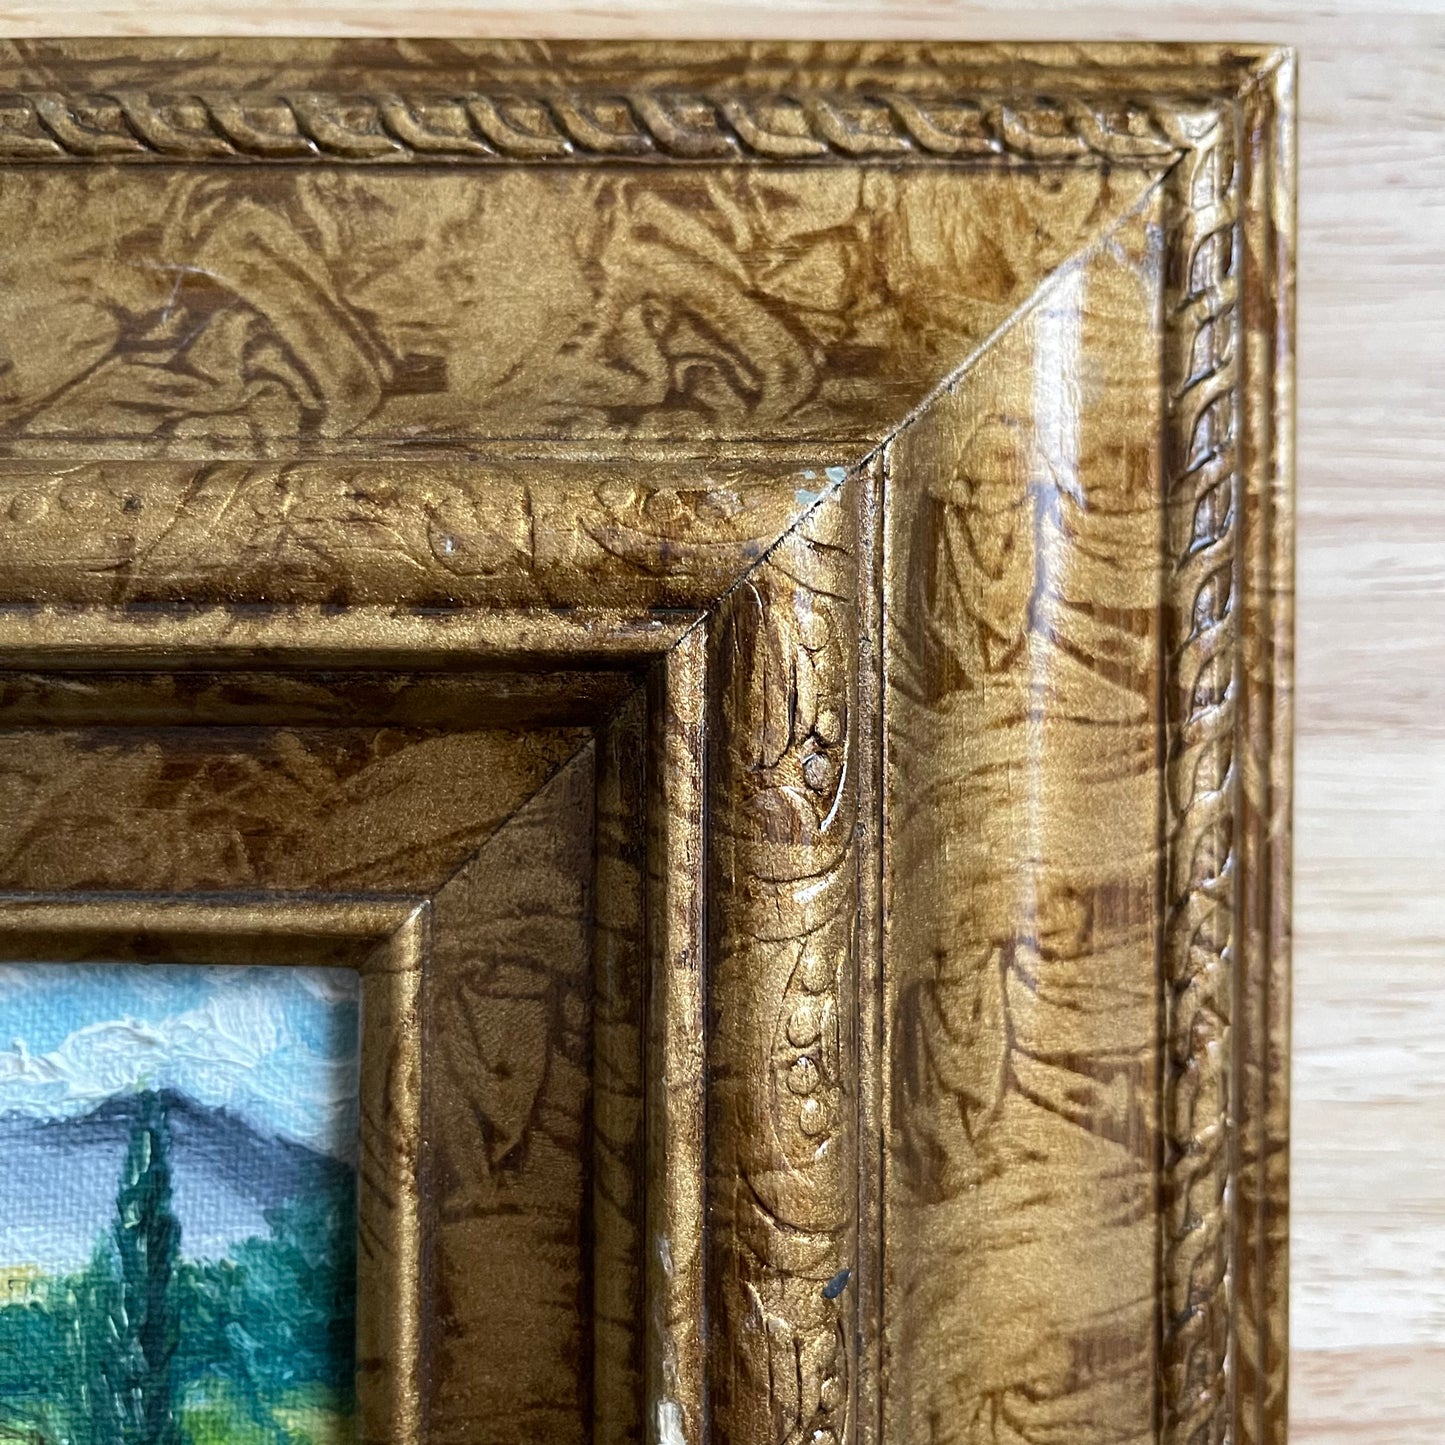 Italian Cypress Tree Landscape 4 x 4 Original Oil Landscape Painting Framed